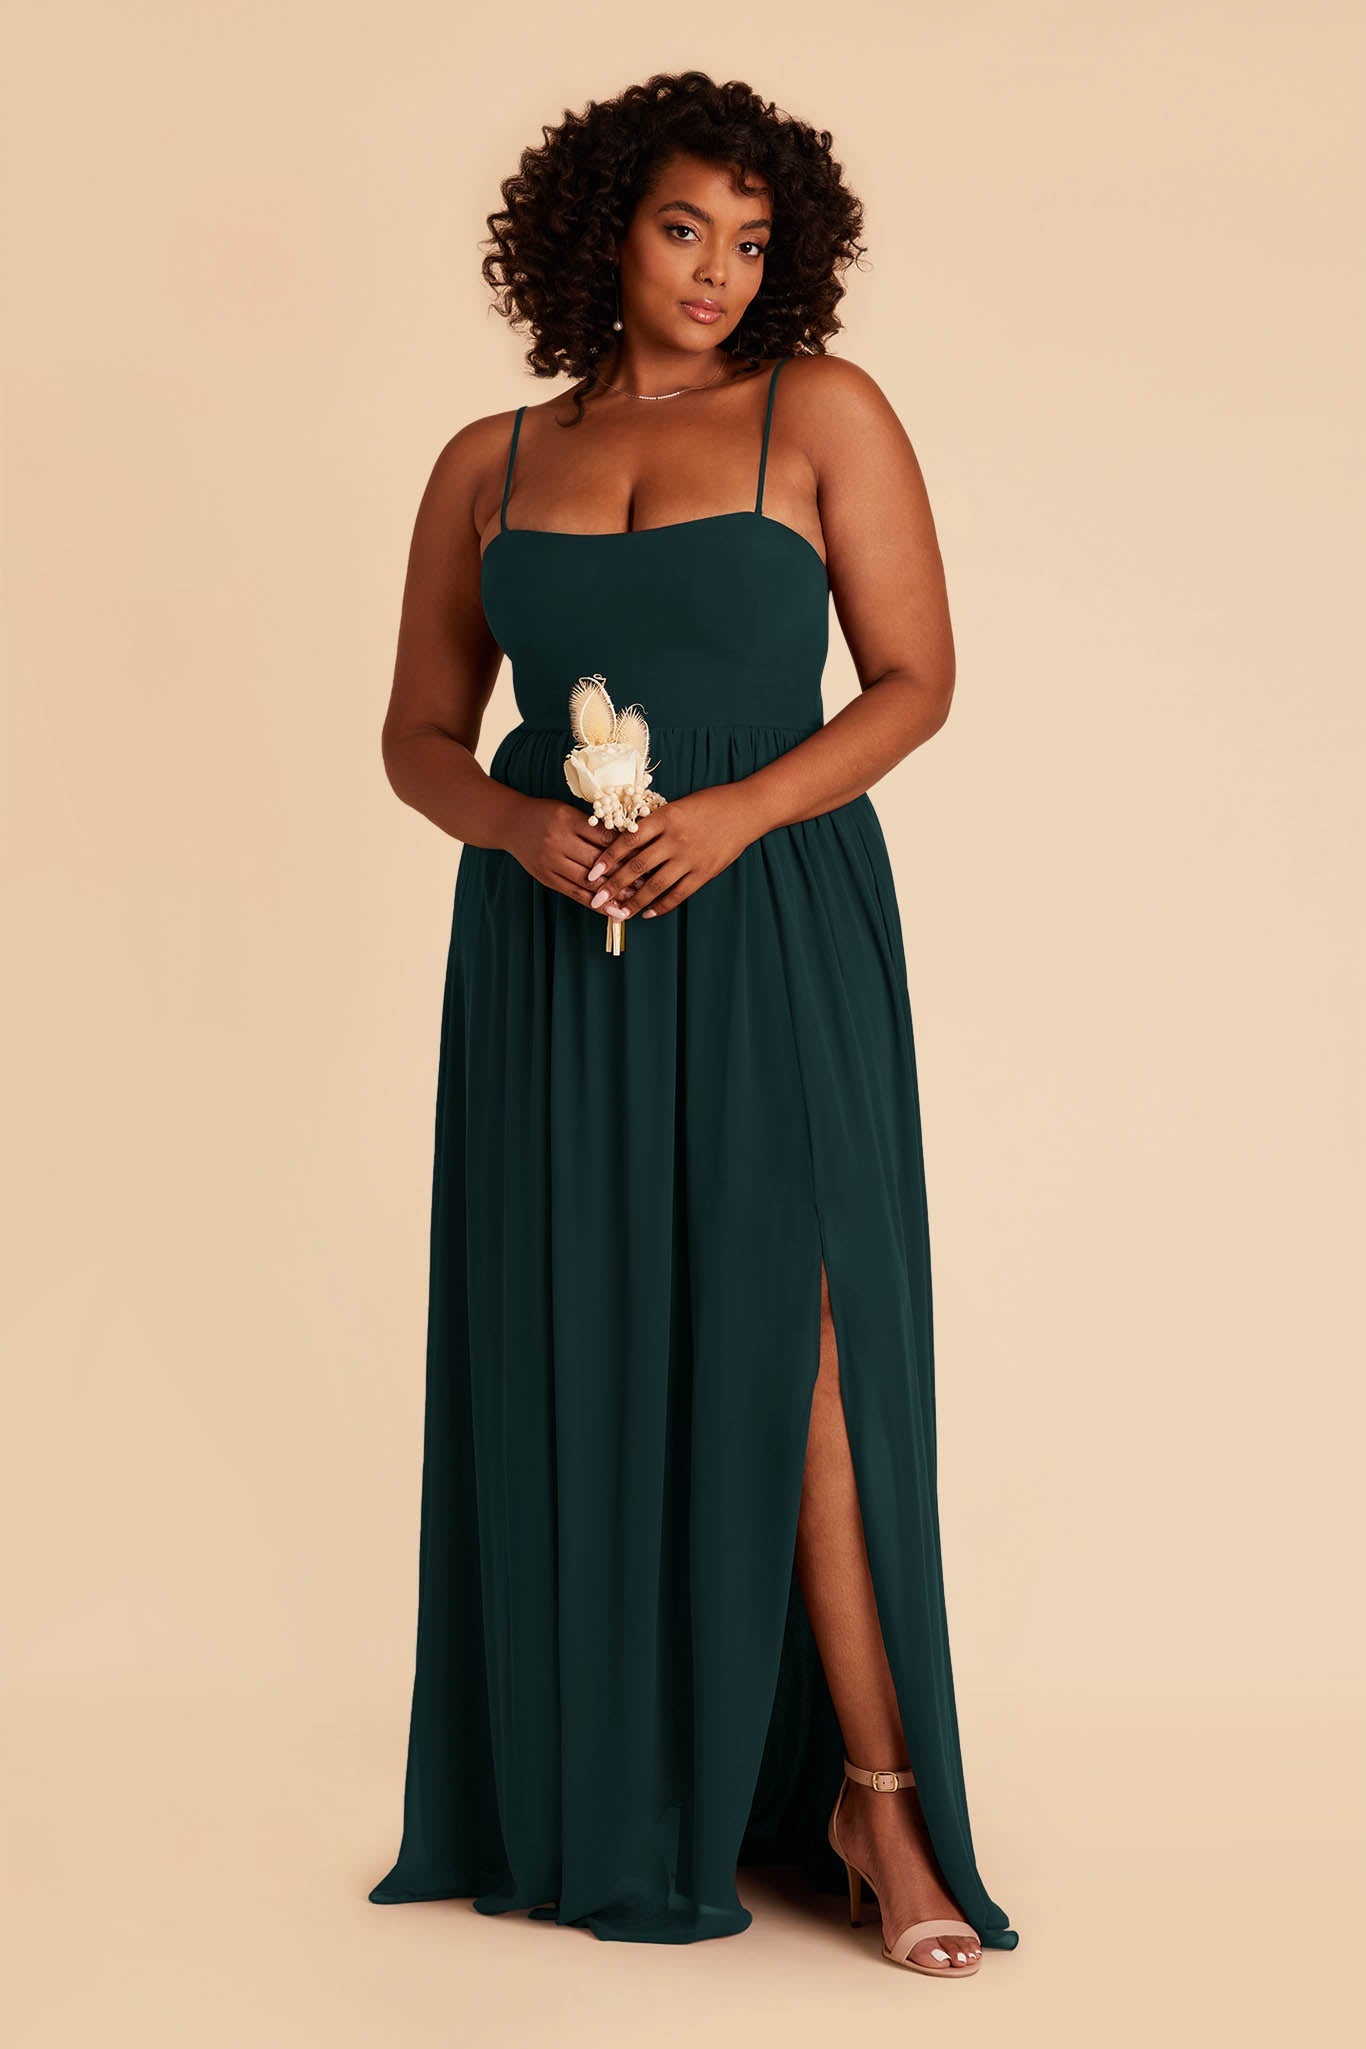 Grace Convertible Chiffon Bridesmaid Dress in Emerald